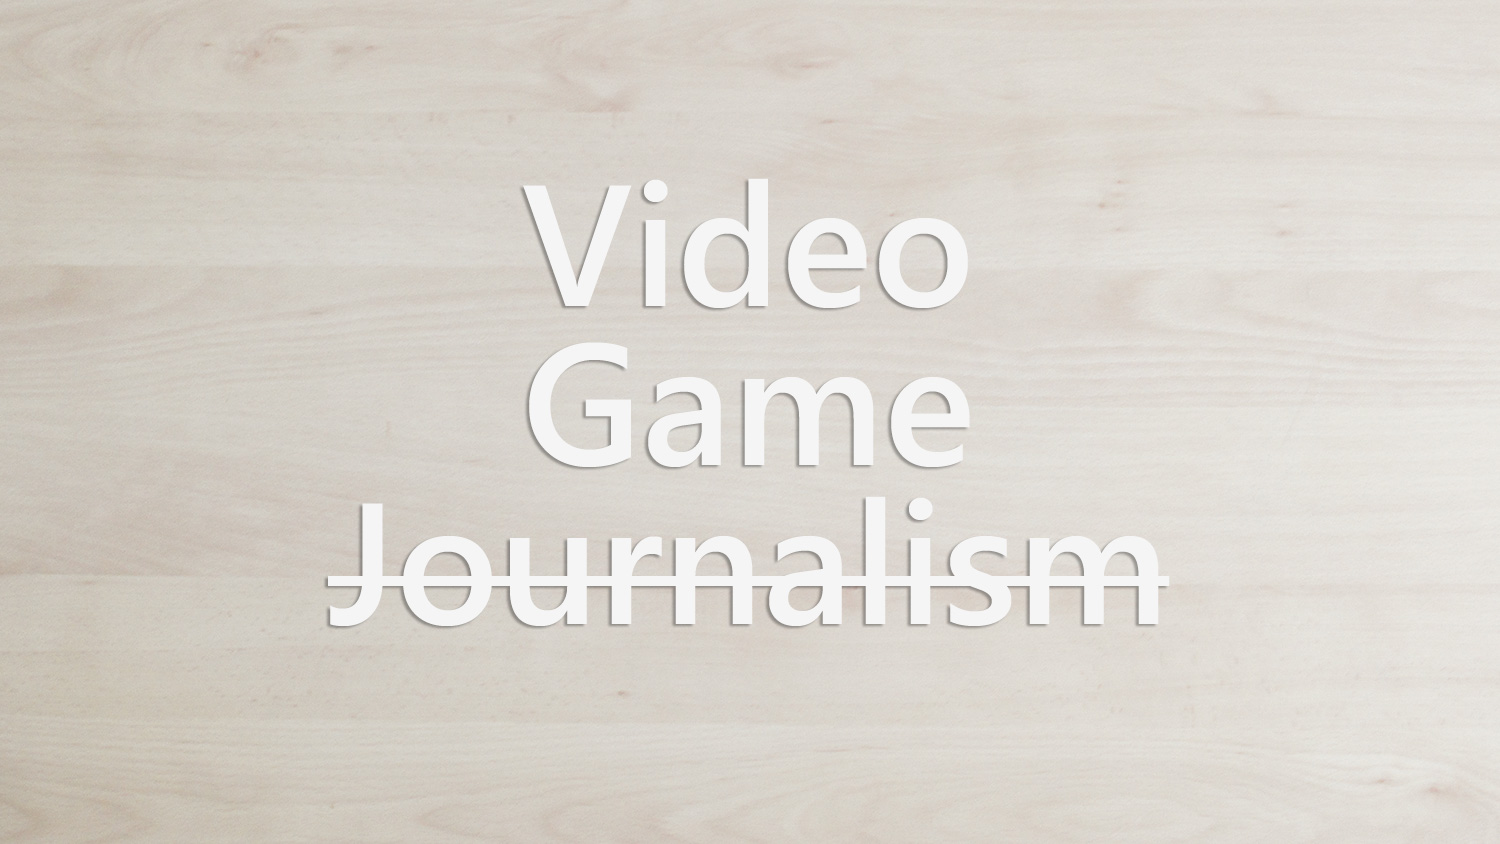 Video Game Journalism